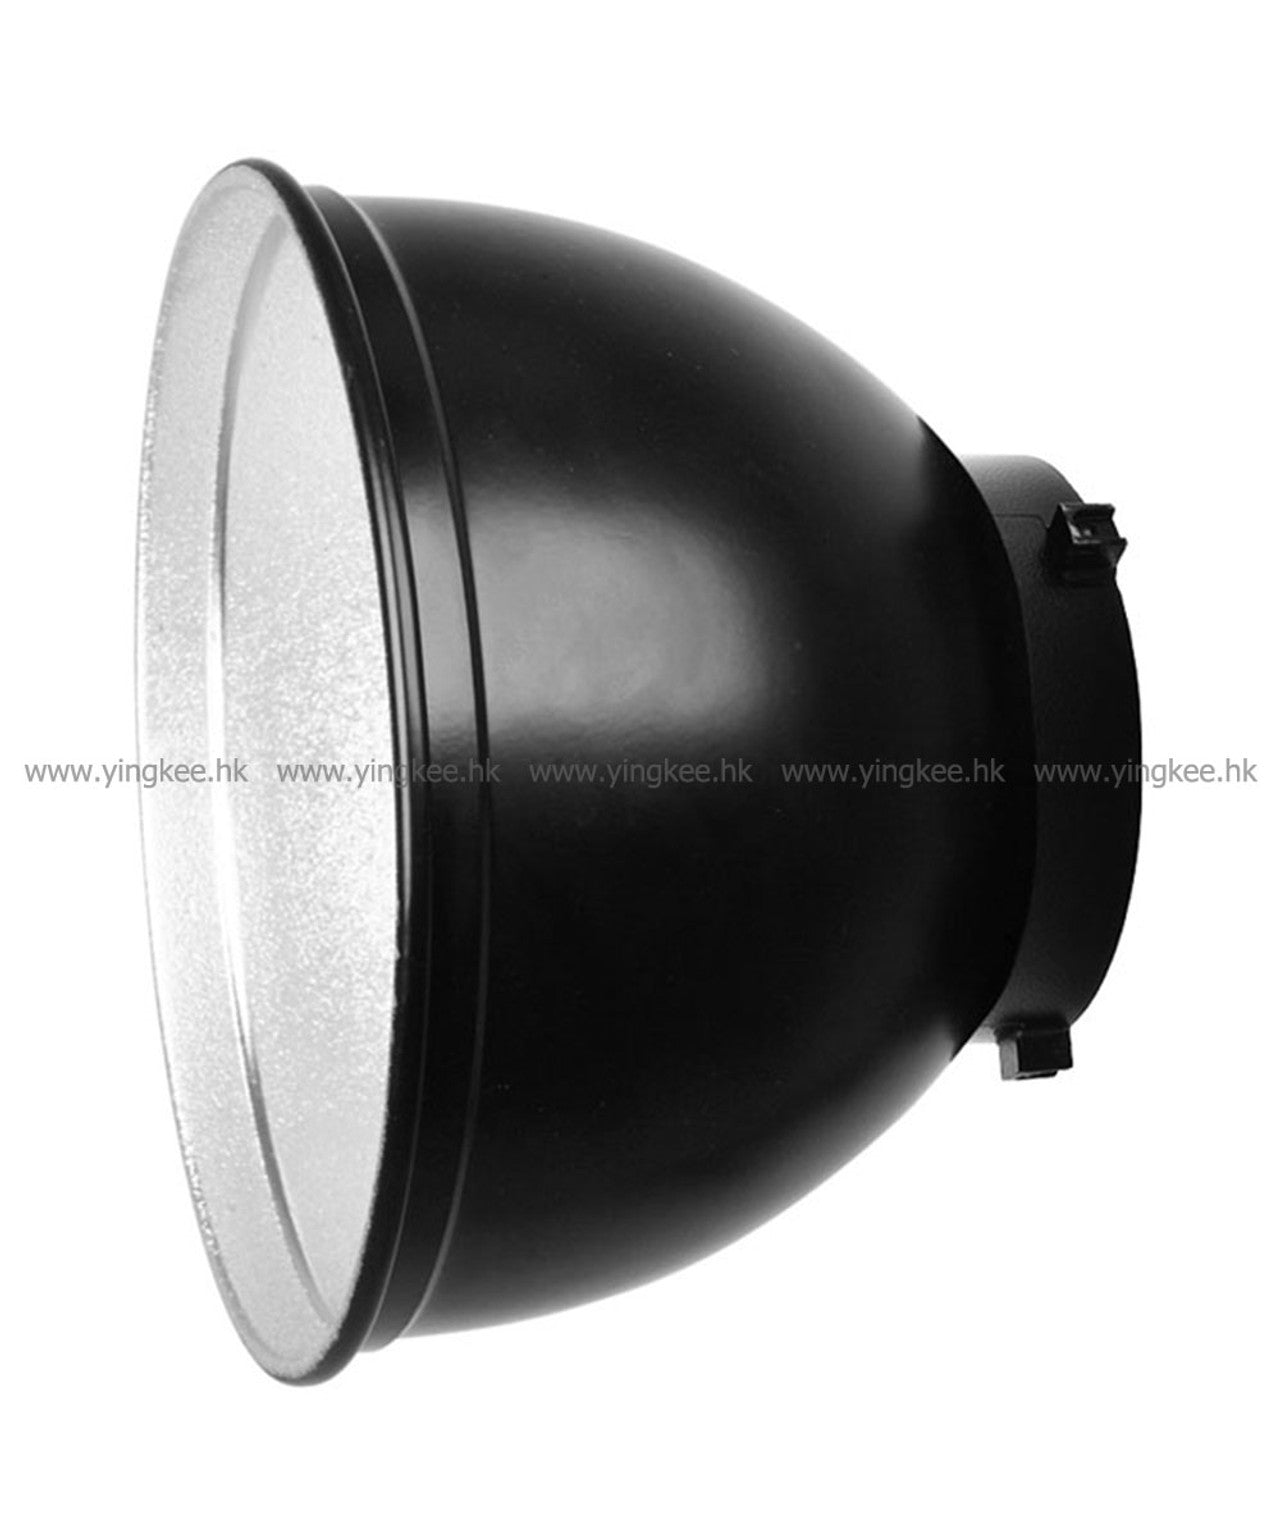 Jinbei 金貝 Reflector 55° 標準反光燈罩